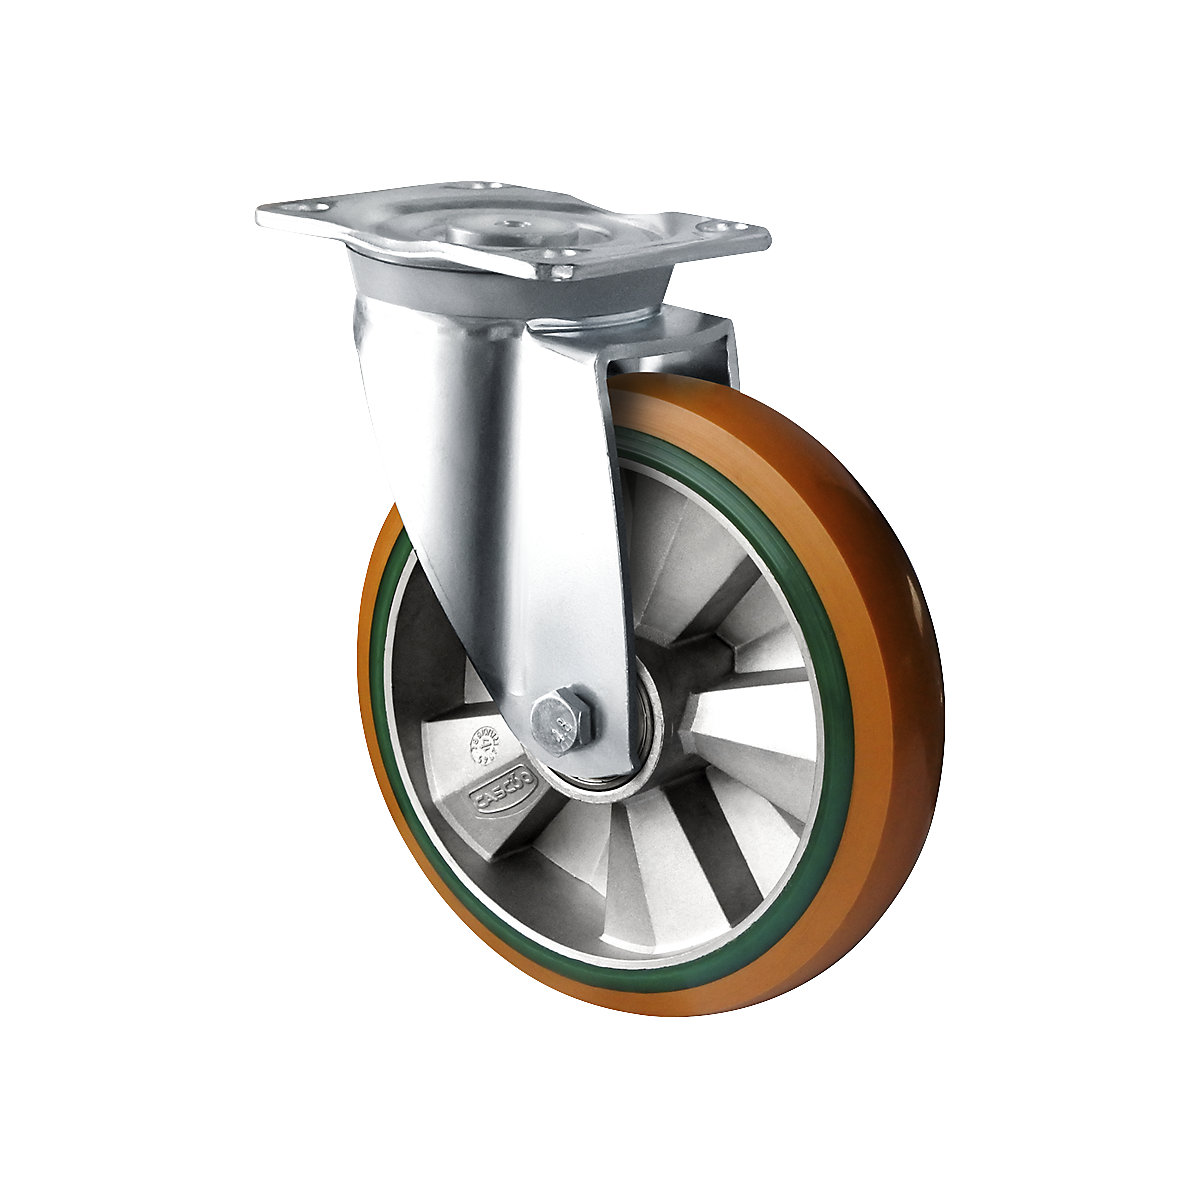 PU/PU elastic tyre, brown / green, wheel Ø x width 200 x 50 mm, 2+ items, swivel castor